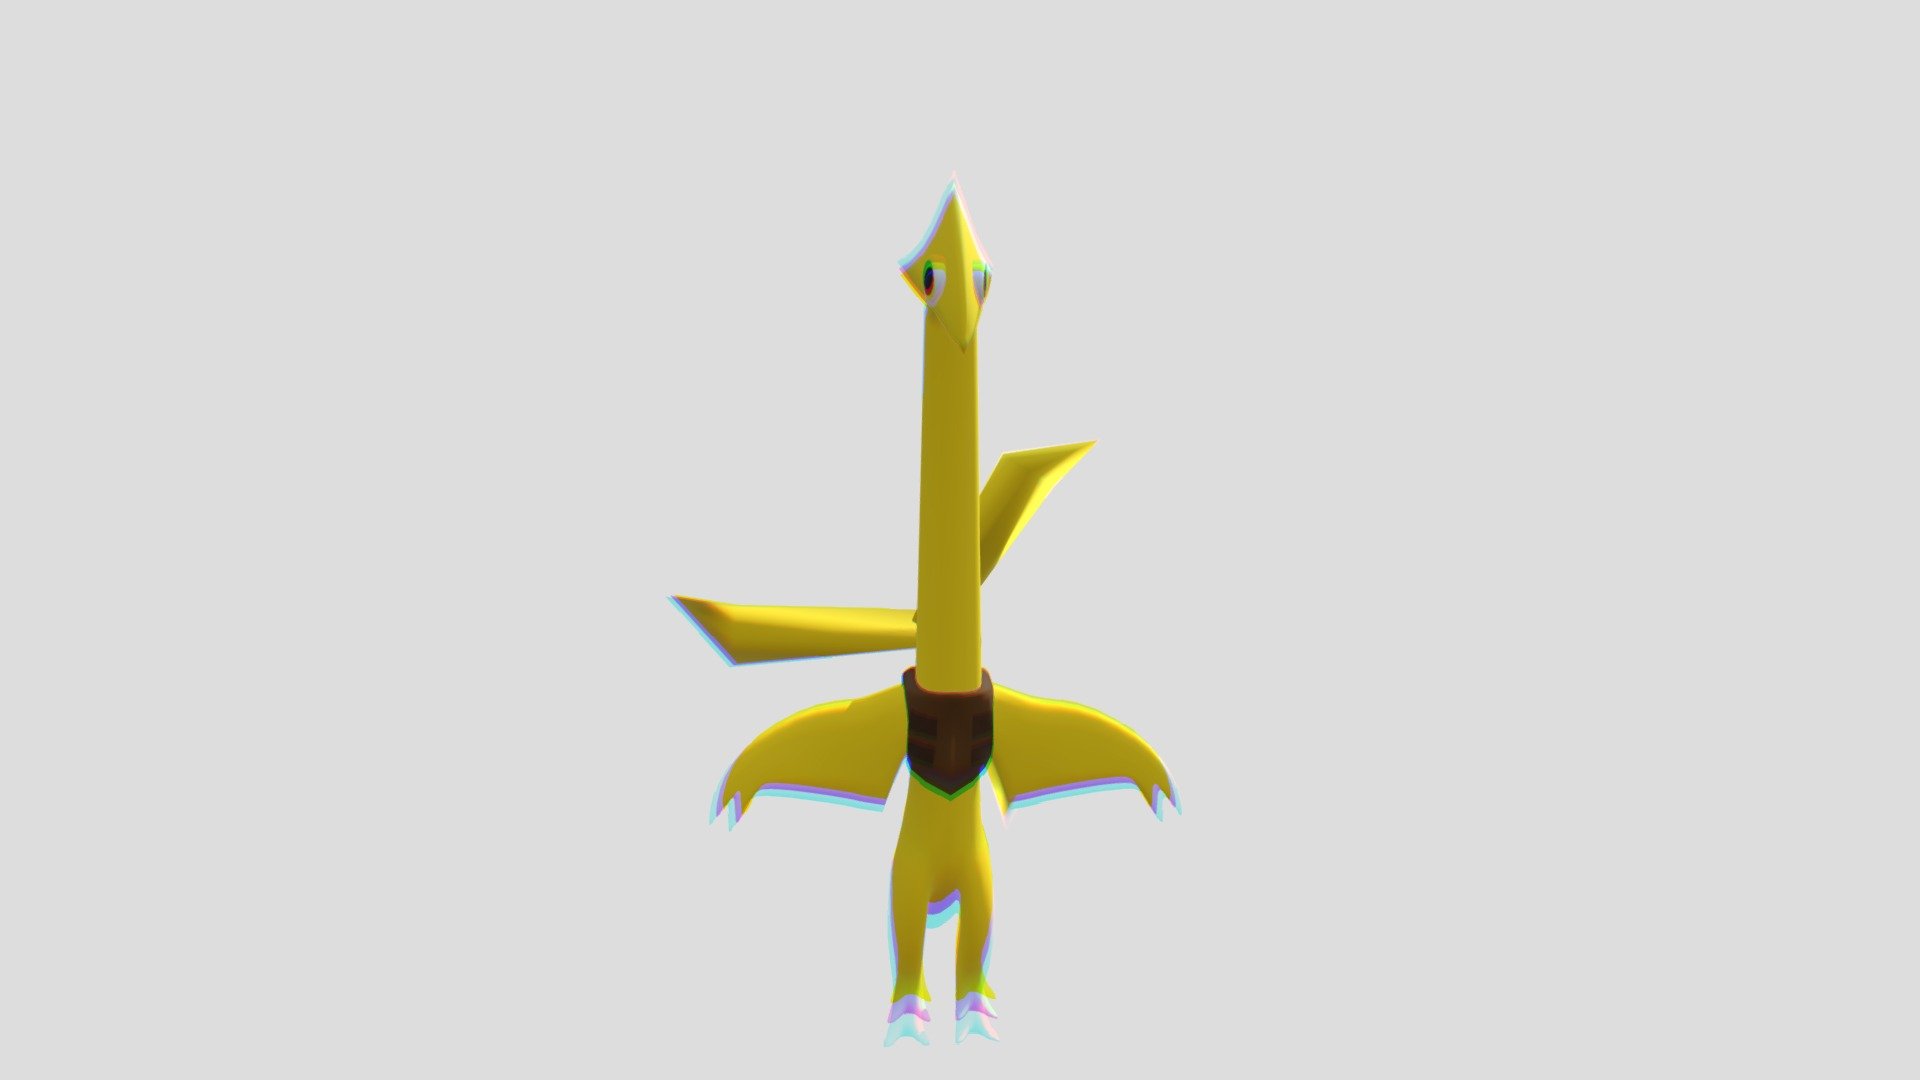 Unused Yellow [RainbowFriends] - Download Free 3D model by